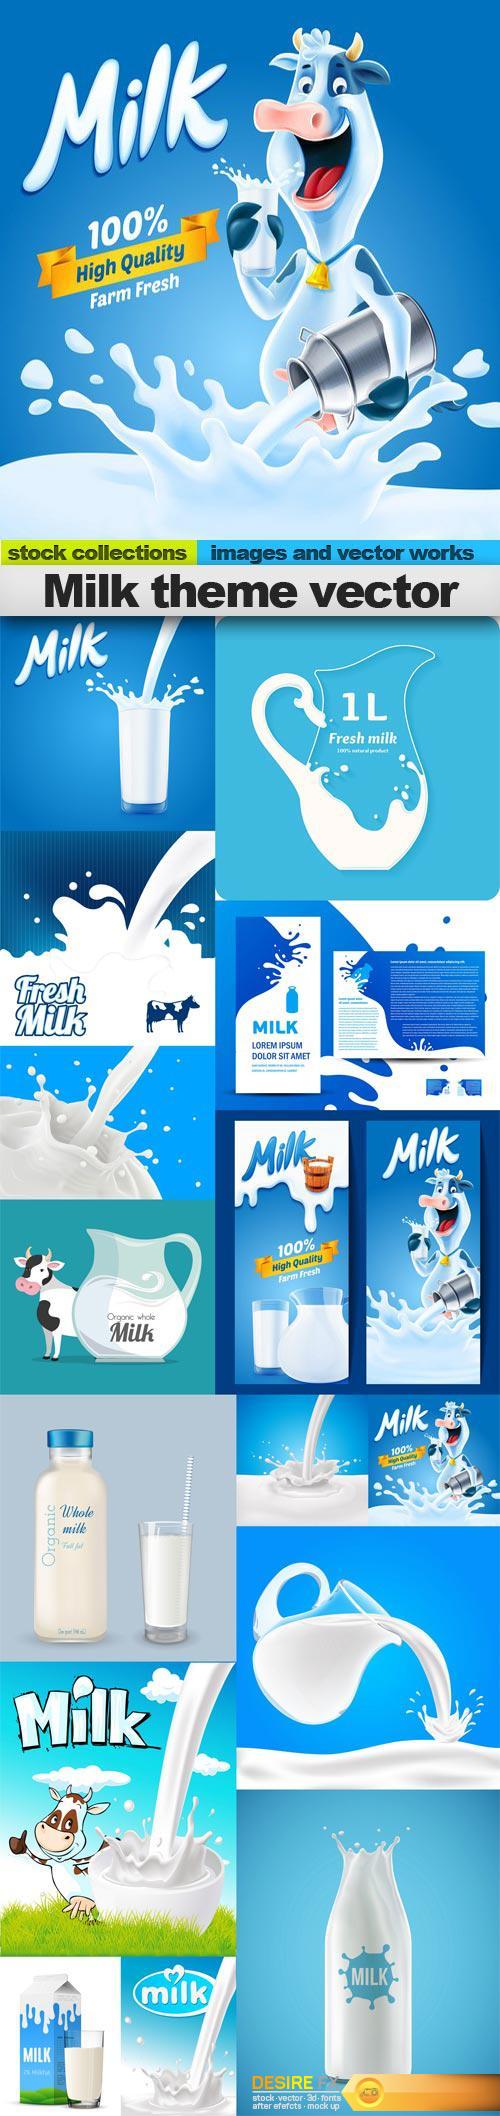 Milk theme vector, 15 x EPS